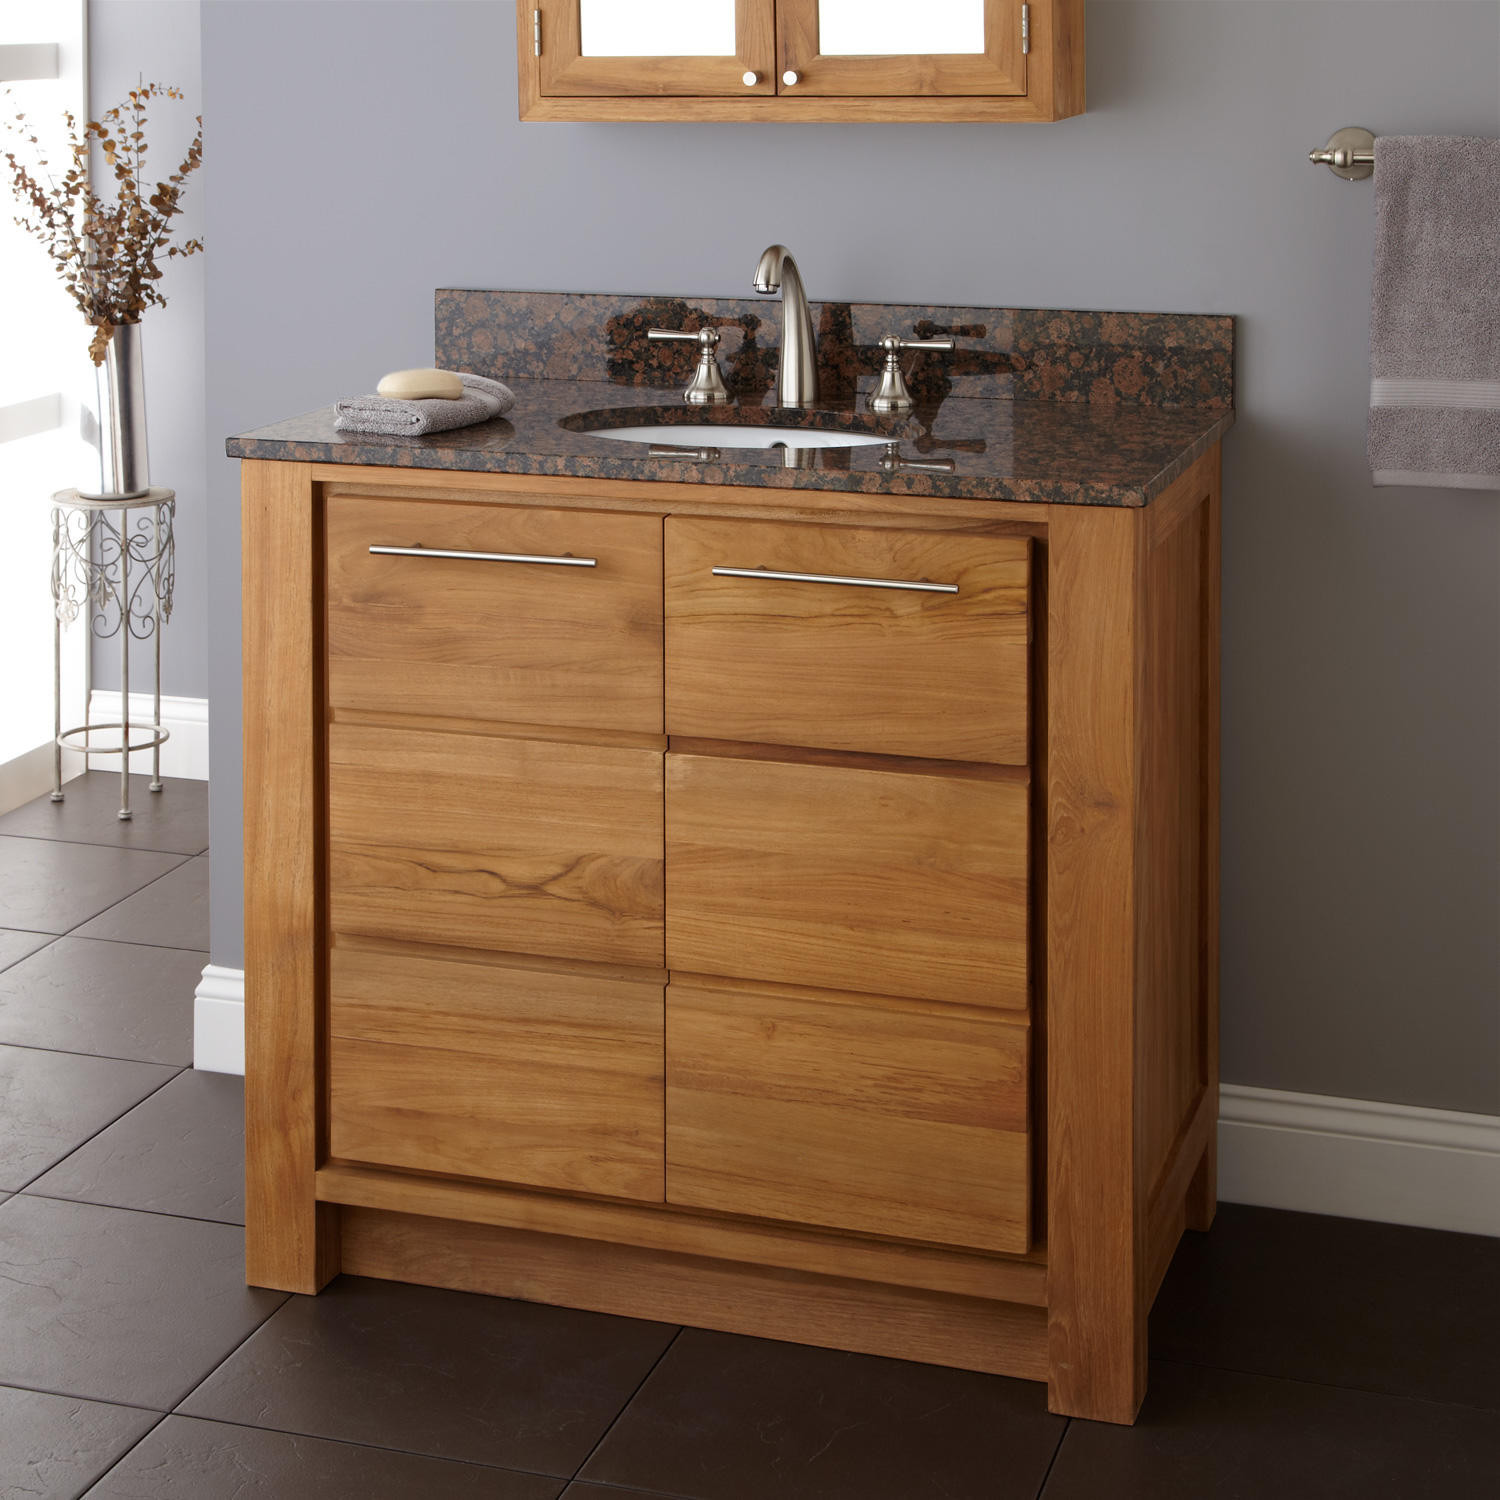 Teak Bathroom Cabinet
 36" Venica Teak Vanity for Undermount Sink Natural Teak